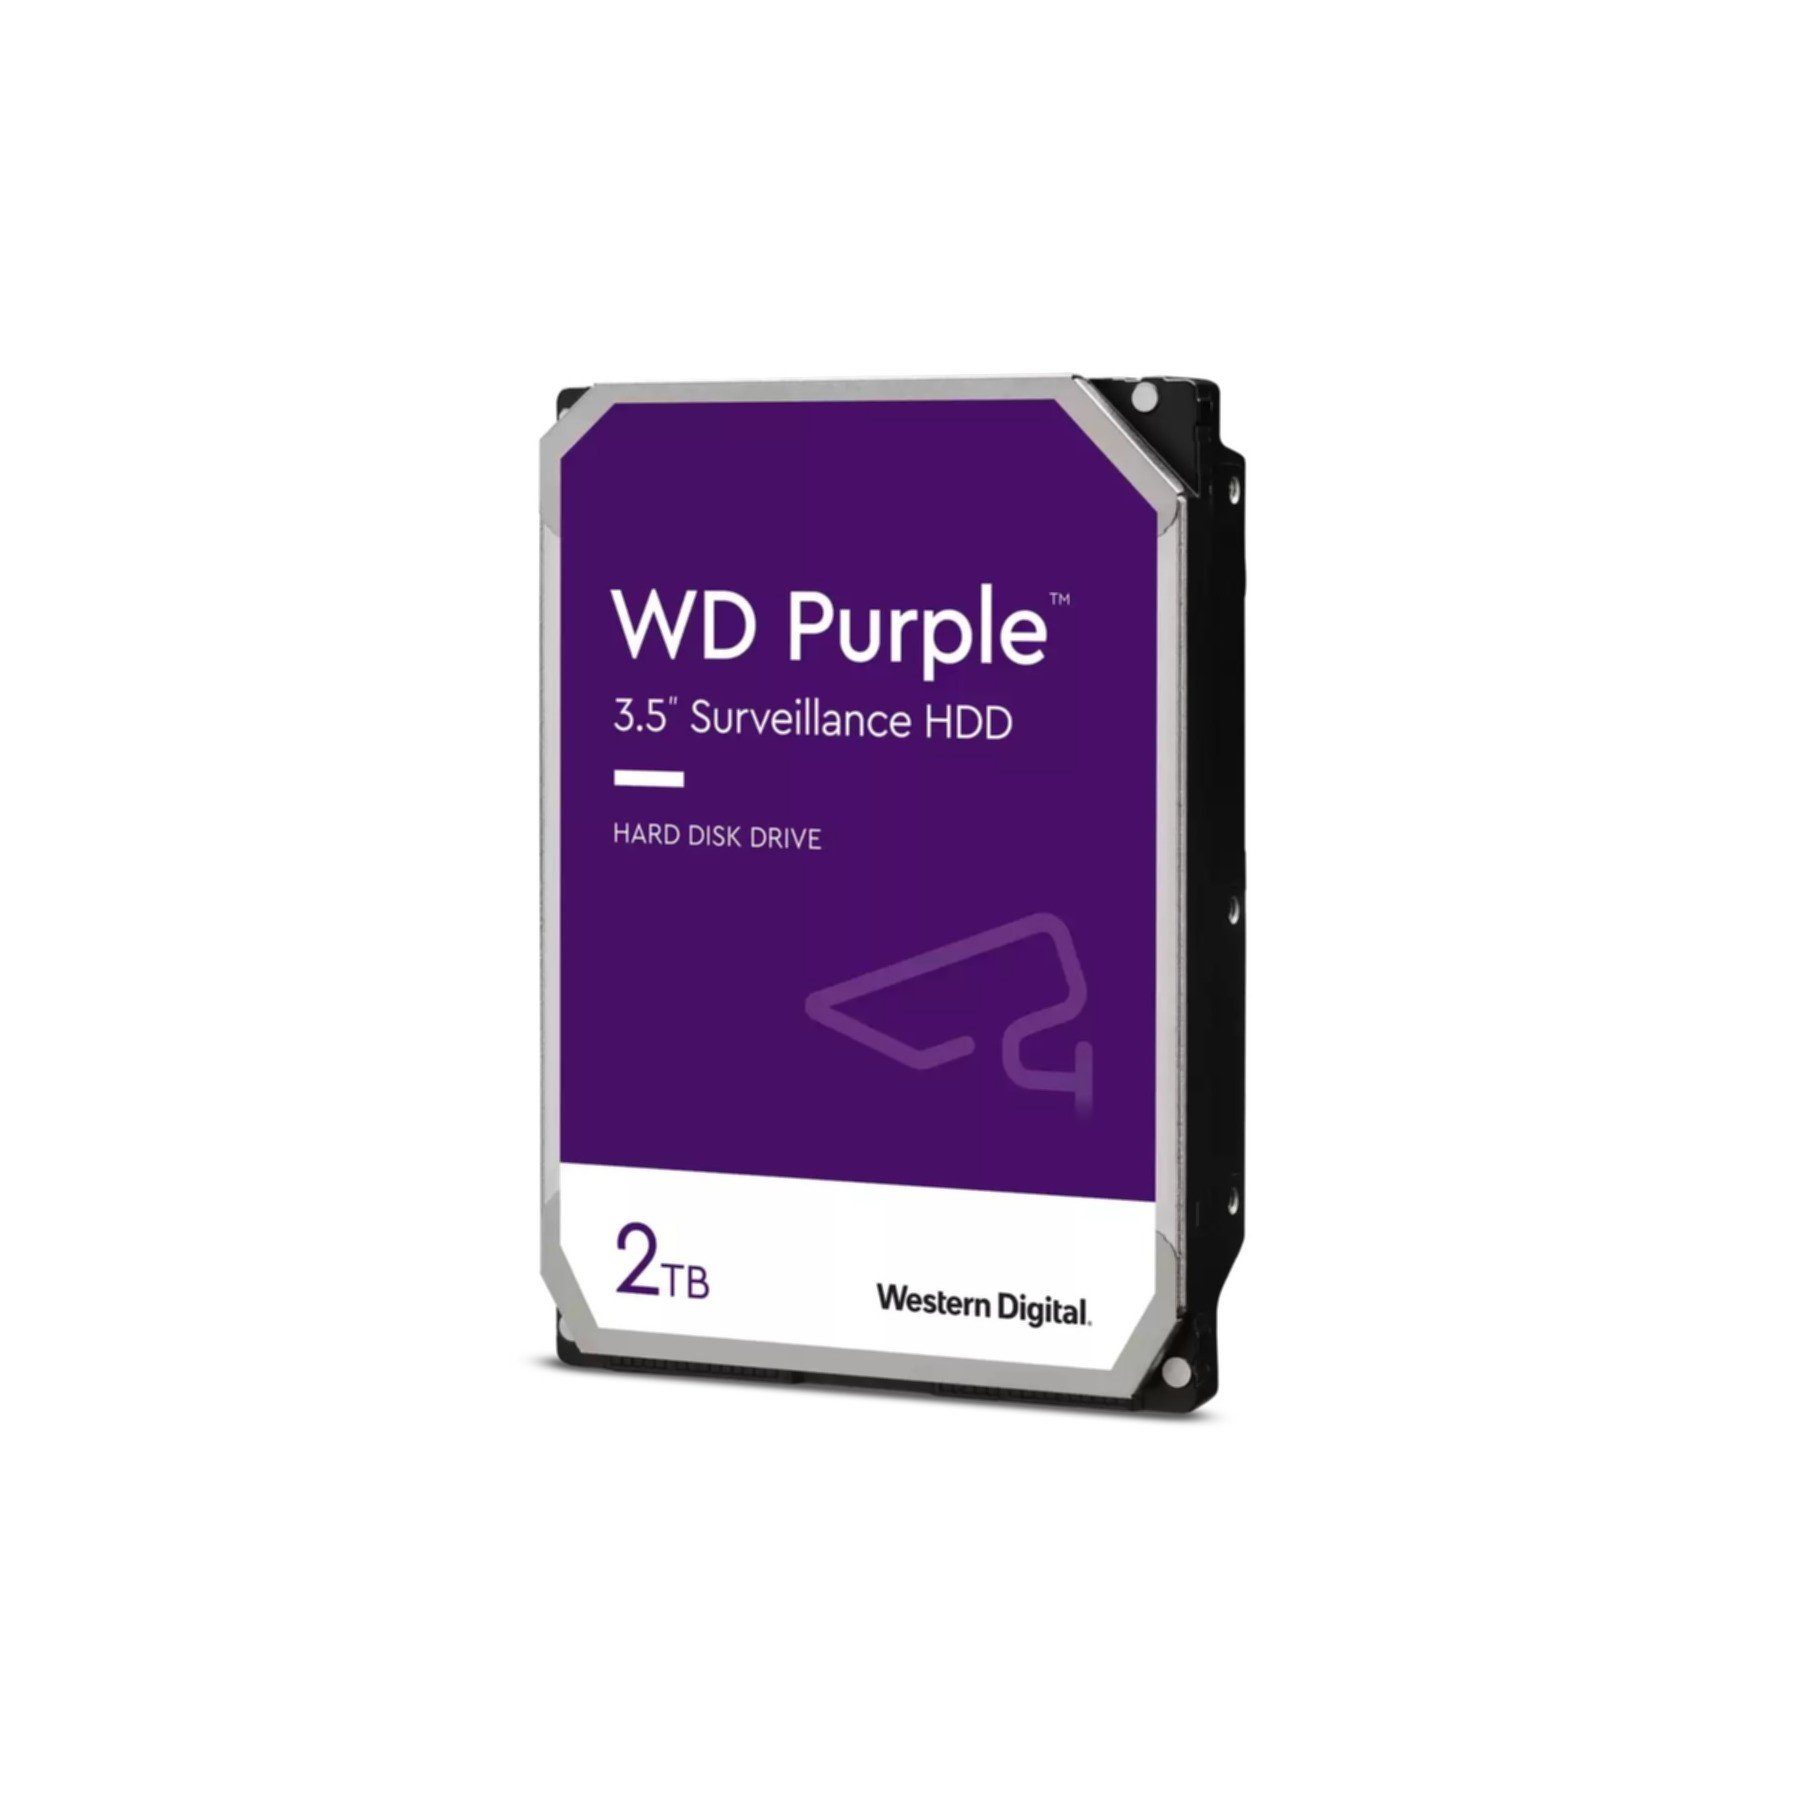 Western Digital WD23PURZ interne HDD-Festplatte